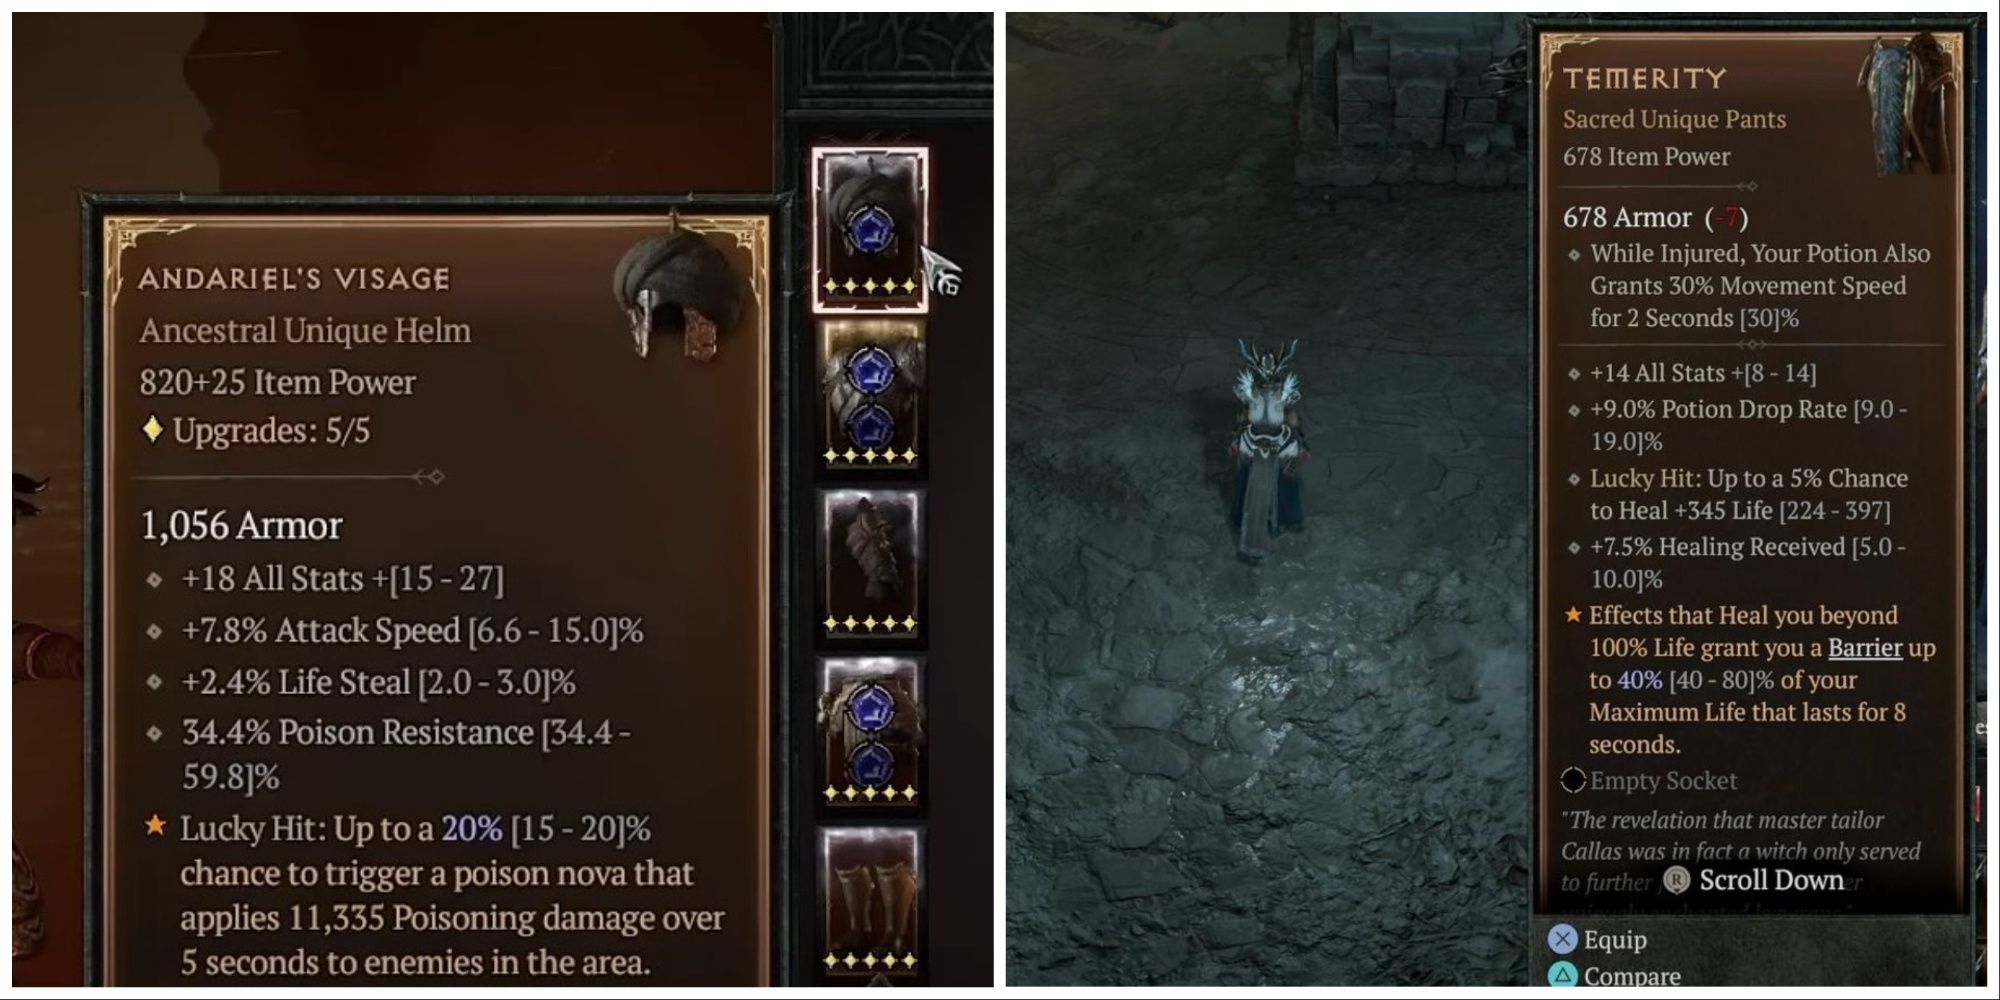 Diablo 4 Rarest Items featured Andariel's Visage and Temerity split image